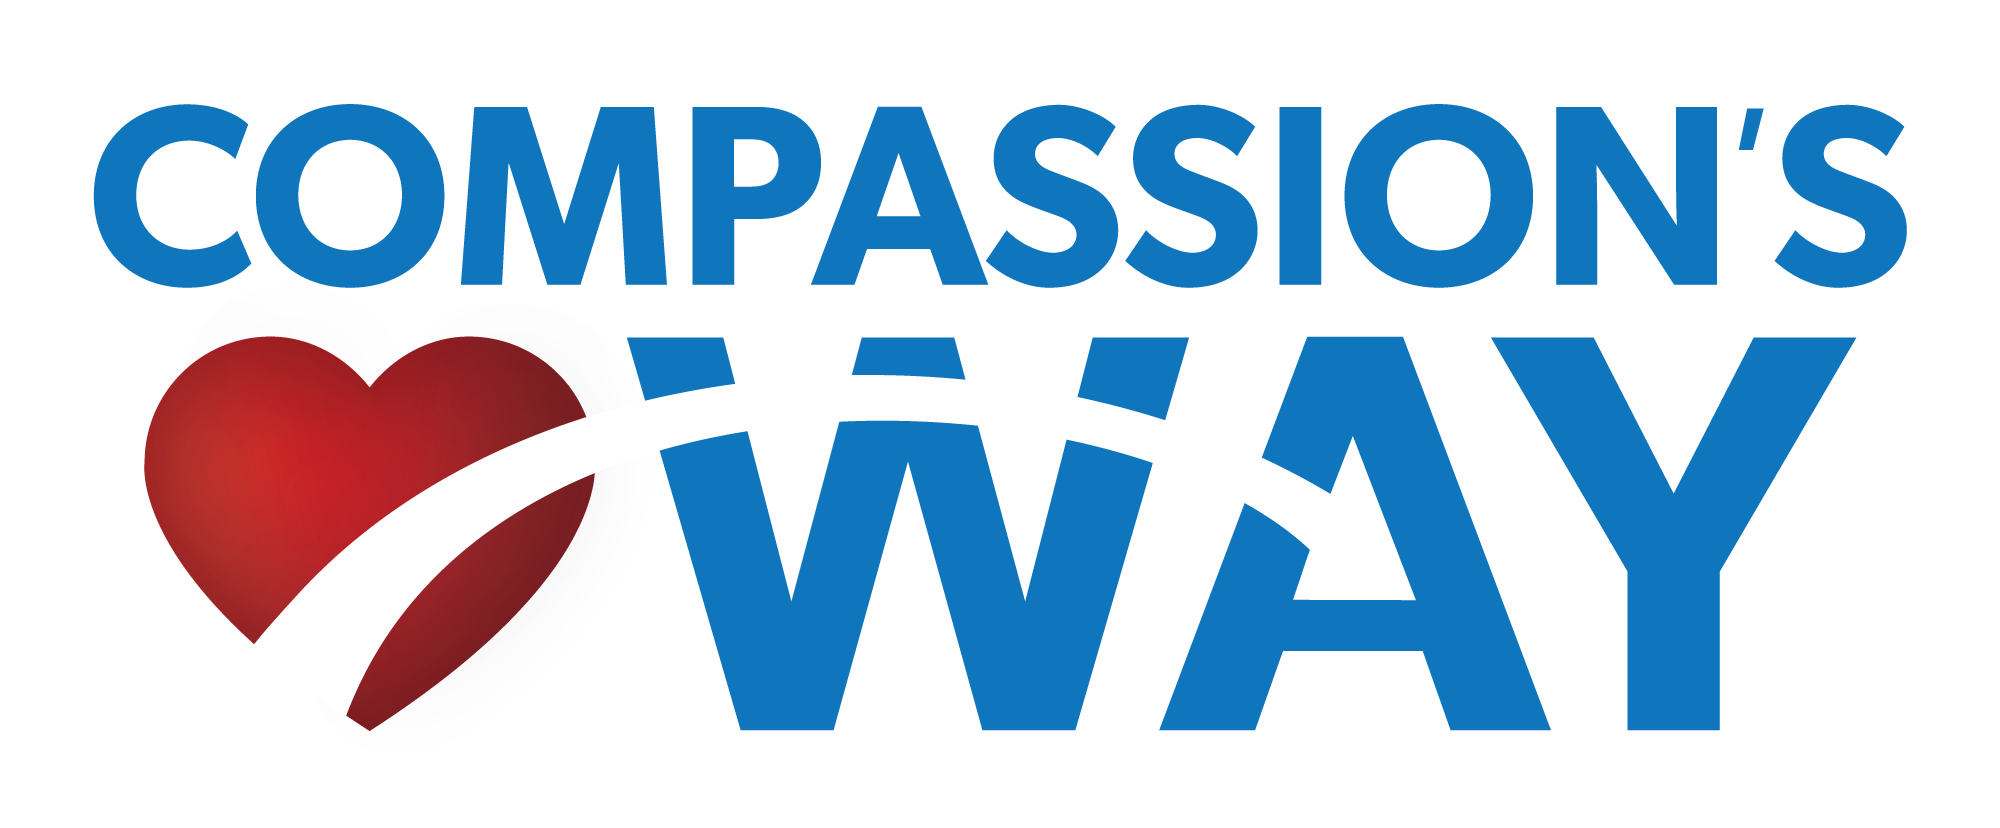 Compassion's Way, Inc. logo